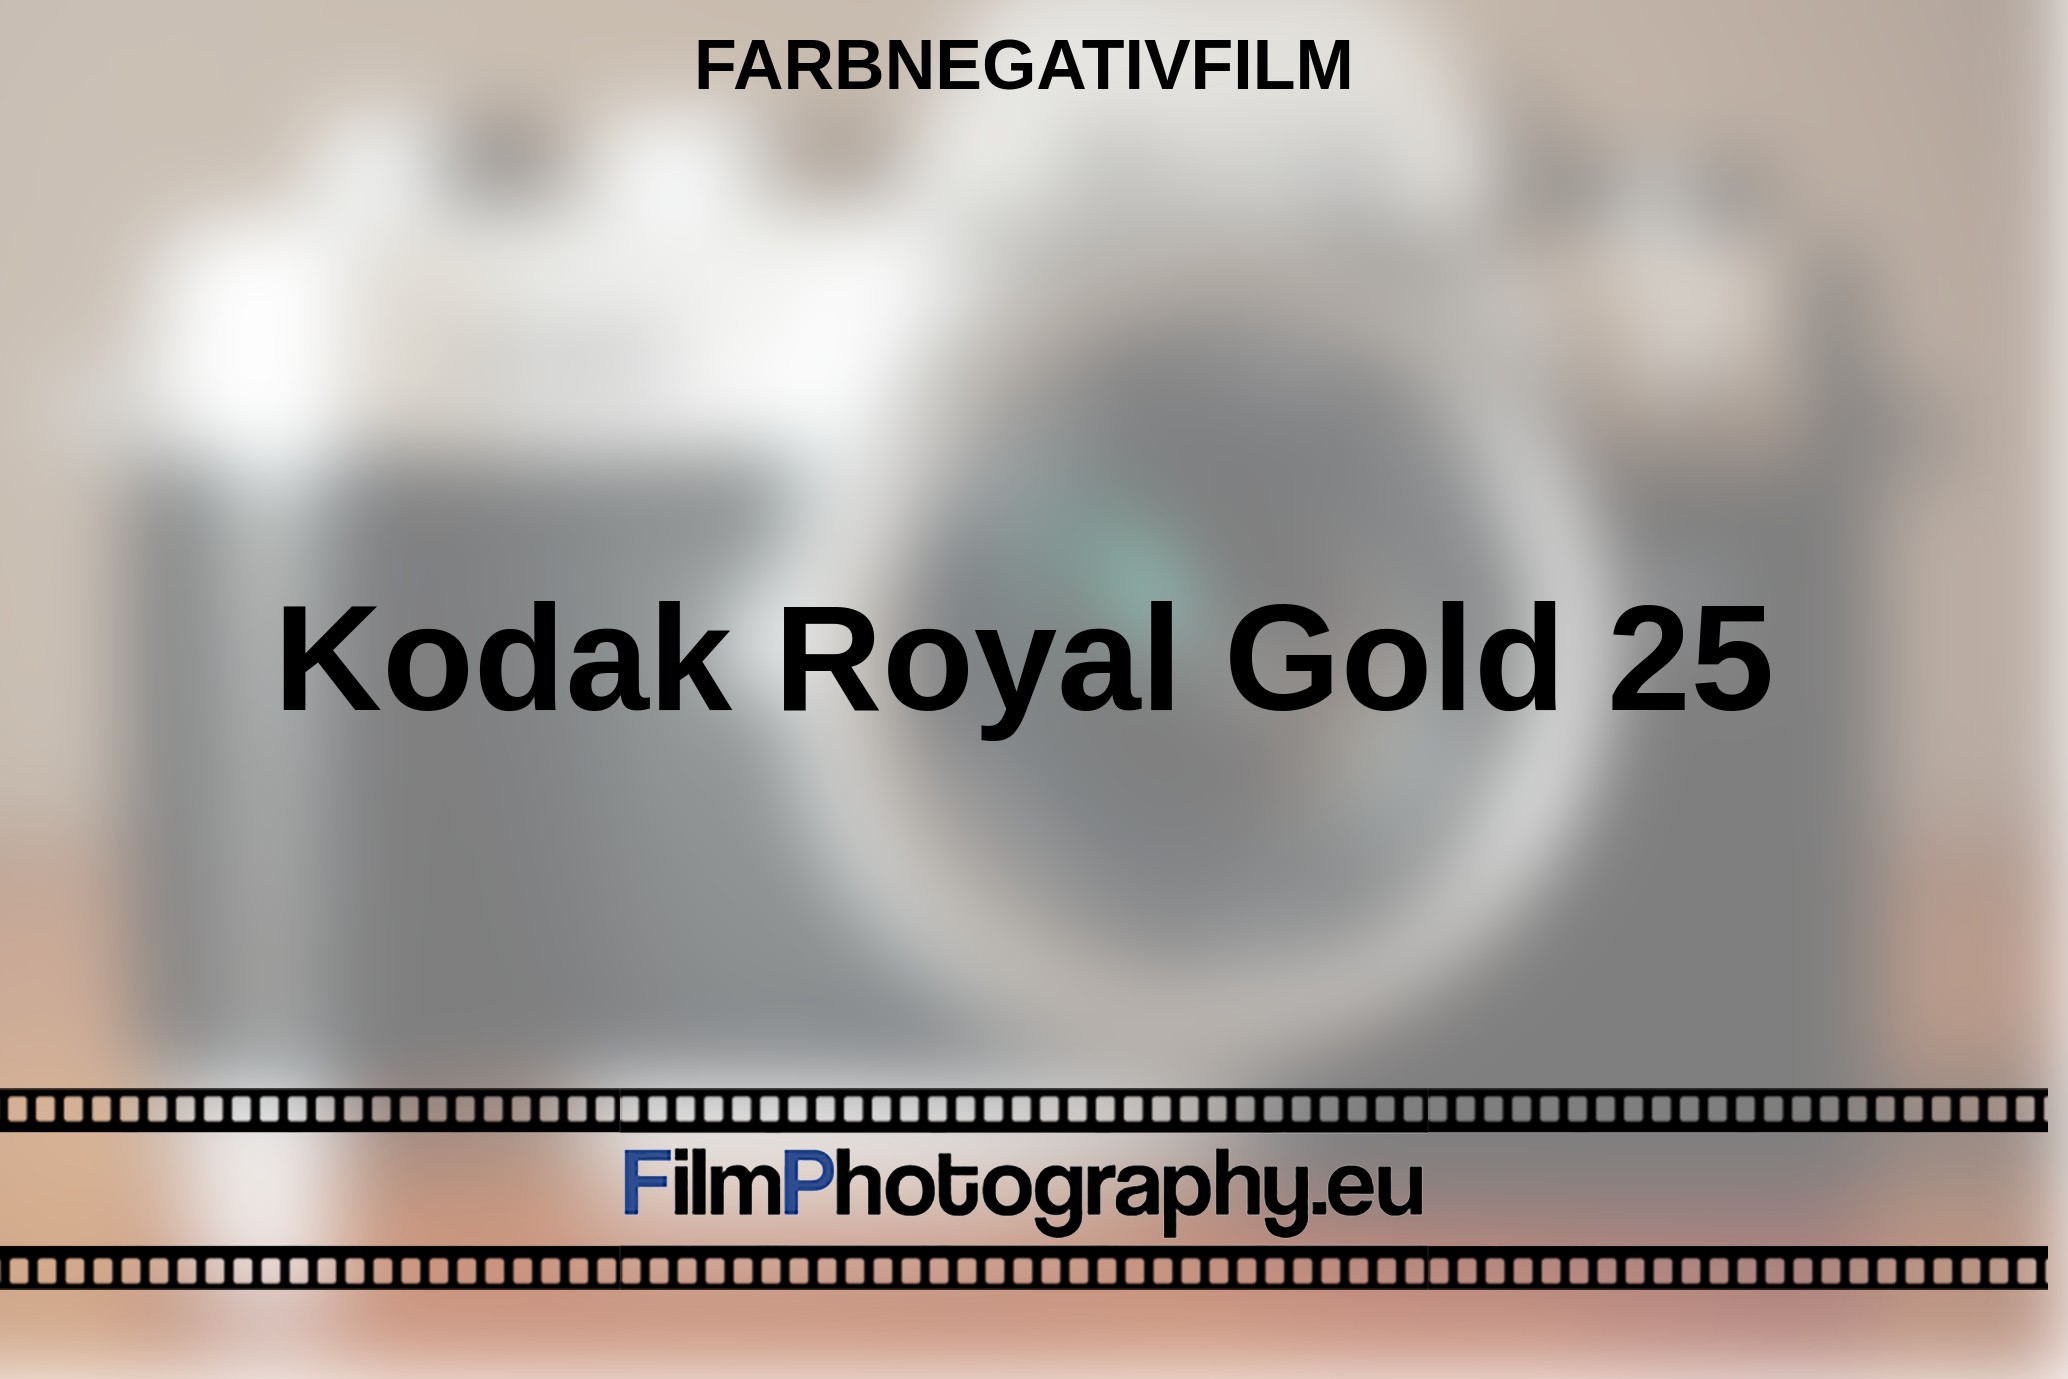 Kodak-Royal-Gold-25-Farbnegativfilm-bnv.jpg